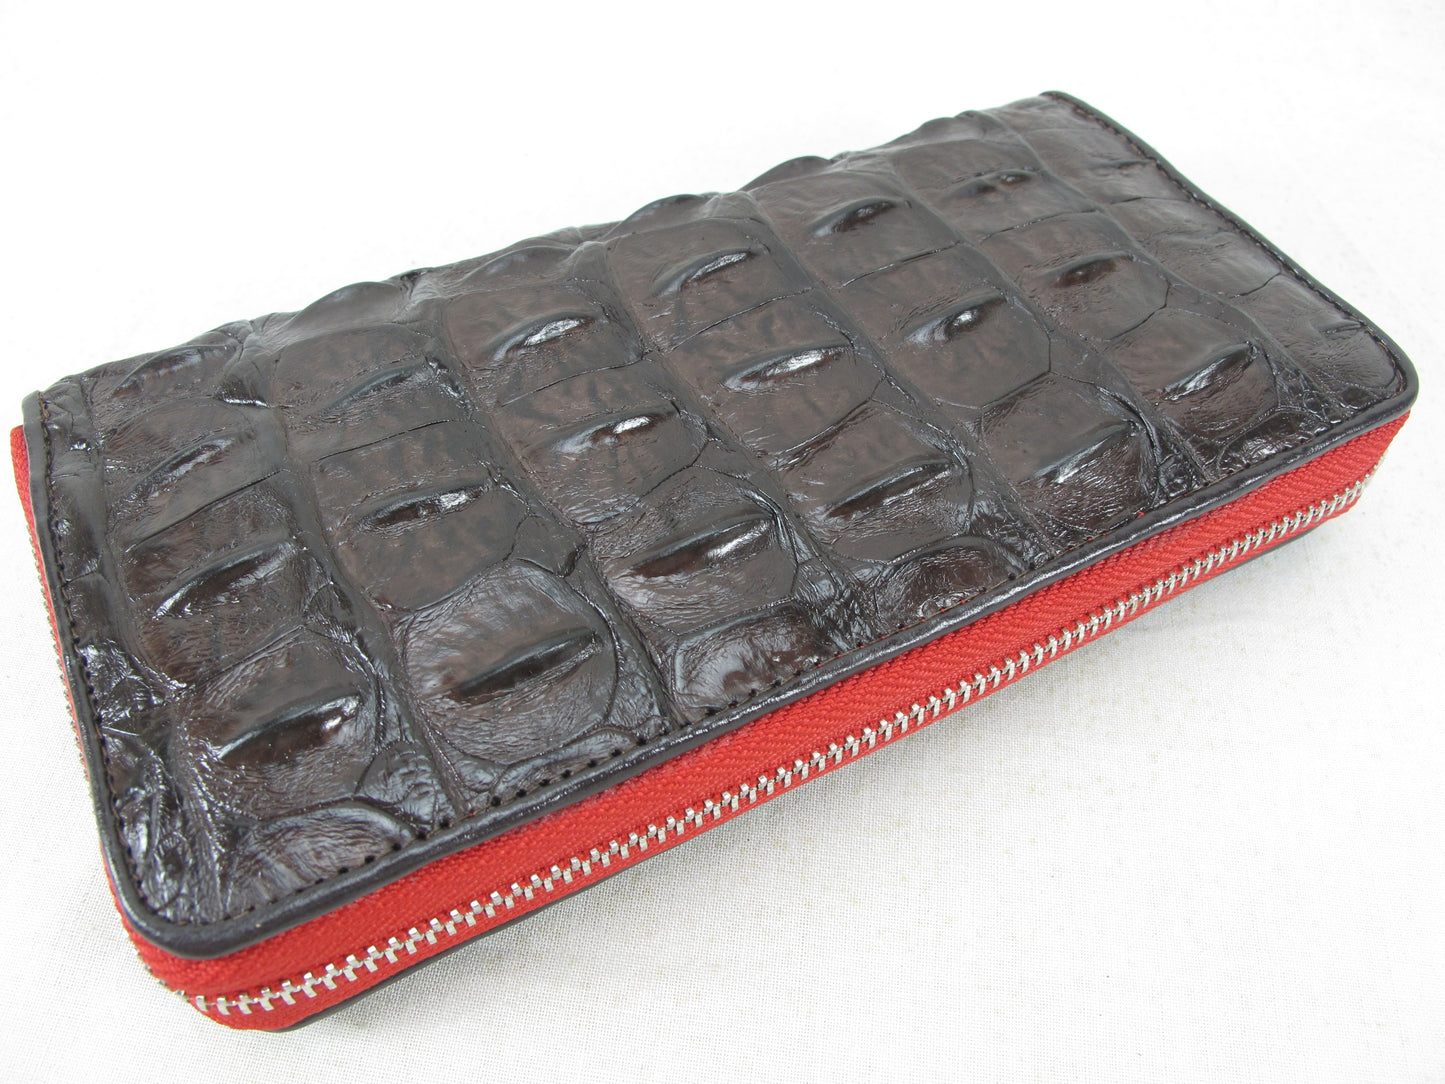 Genuine Crocodile Backbone Skin Leather Zip Around Clutch Wallet Purse with Red Zipper